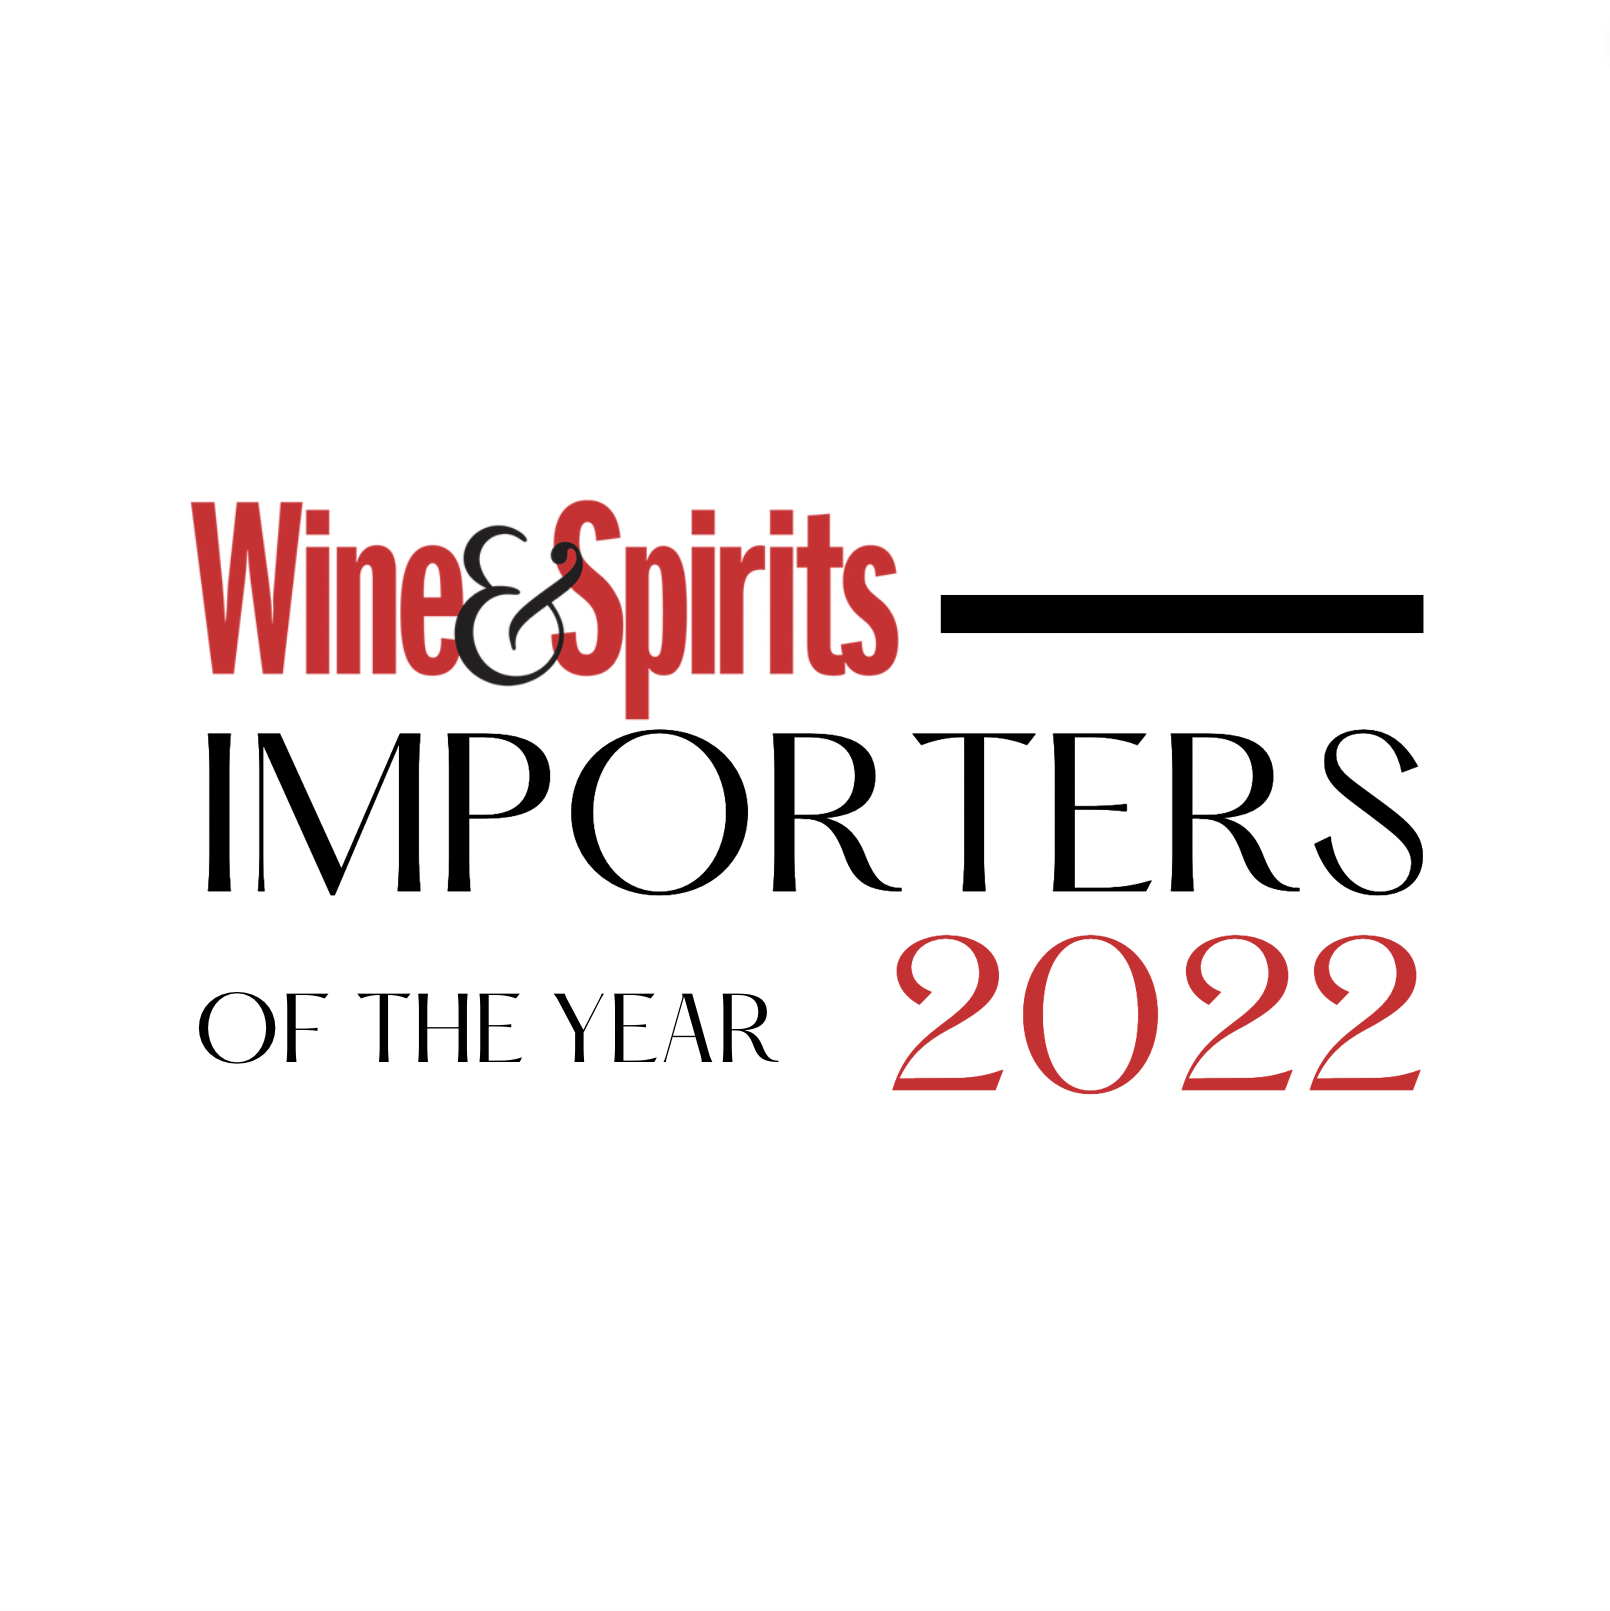 Loosen Bros. USA Named a Wine & Spirits Top Importer of 2022!